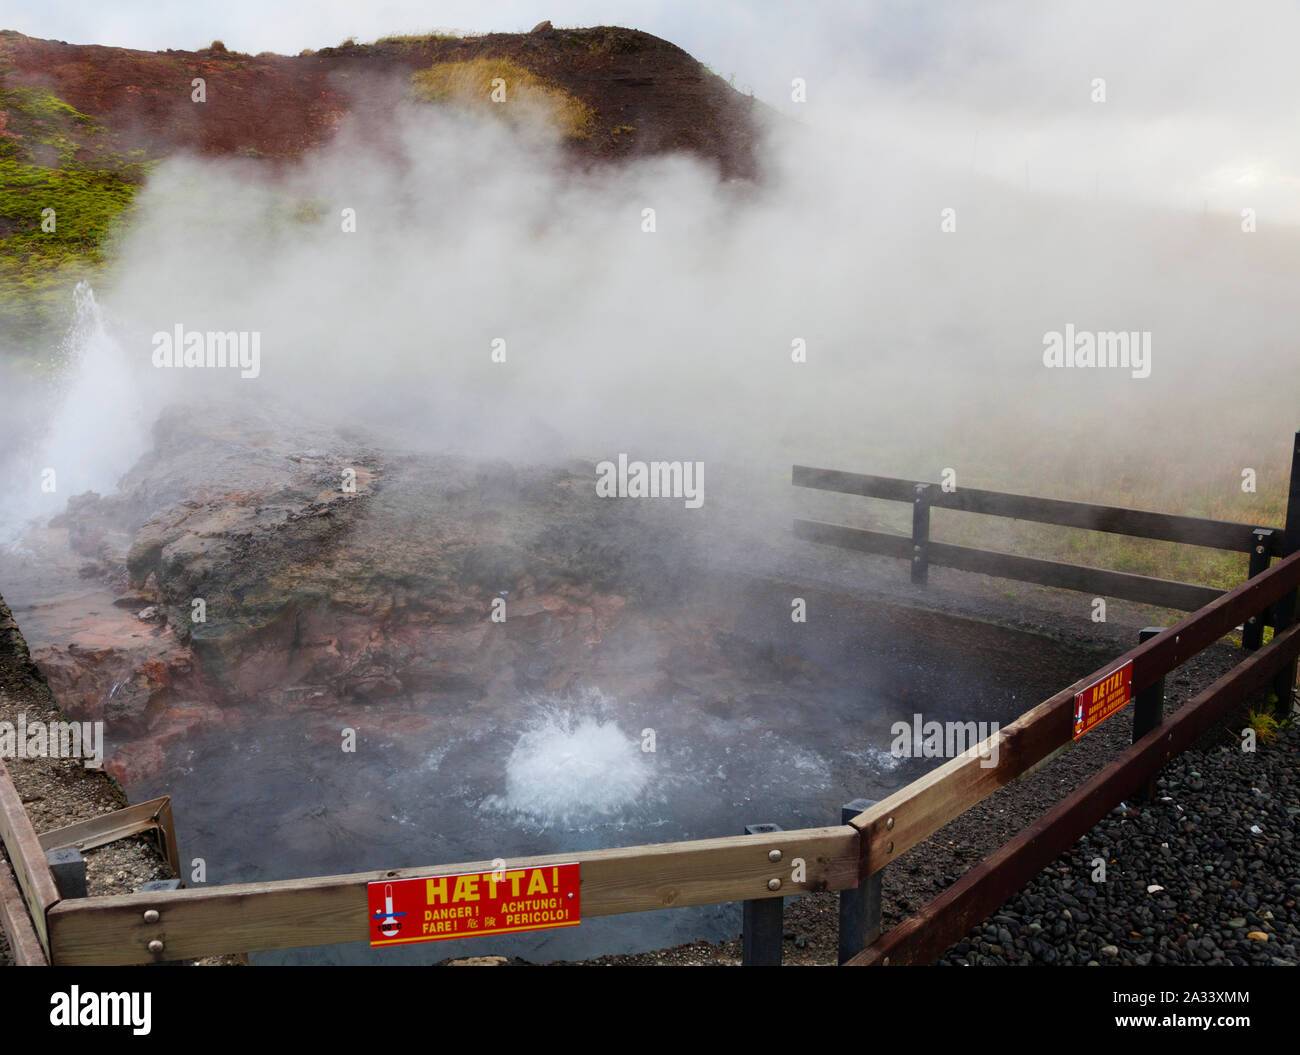 Deildartunguhver hot spring - Iceland  Deildartunguhver is Europe's most powerful hot spring. Stock Photo